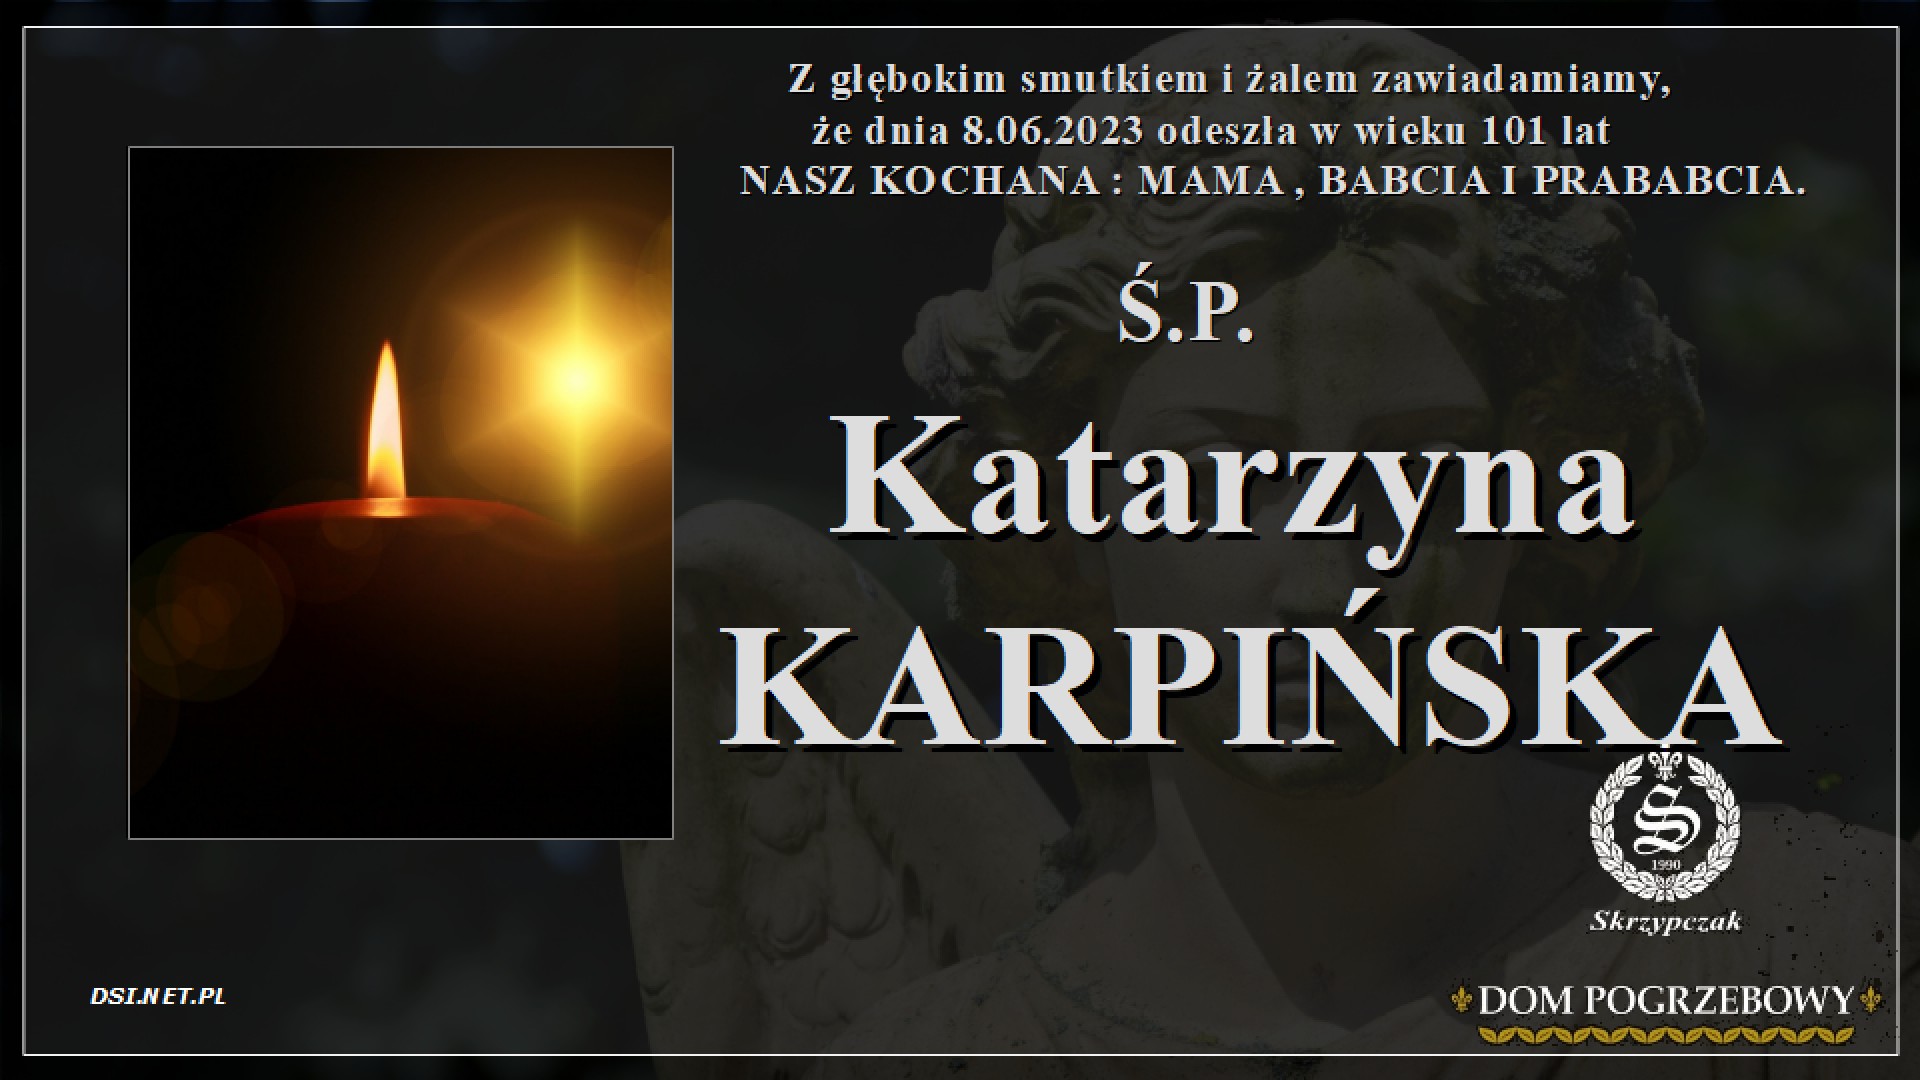 Ś.P. Katarzyna Karpińska